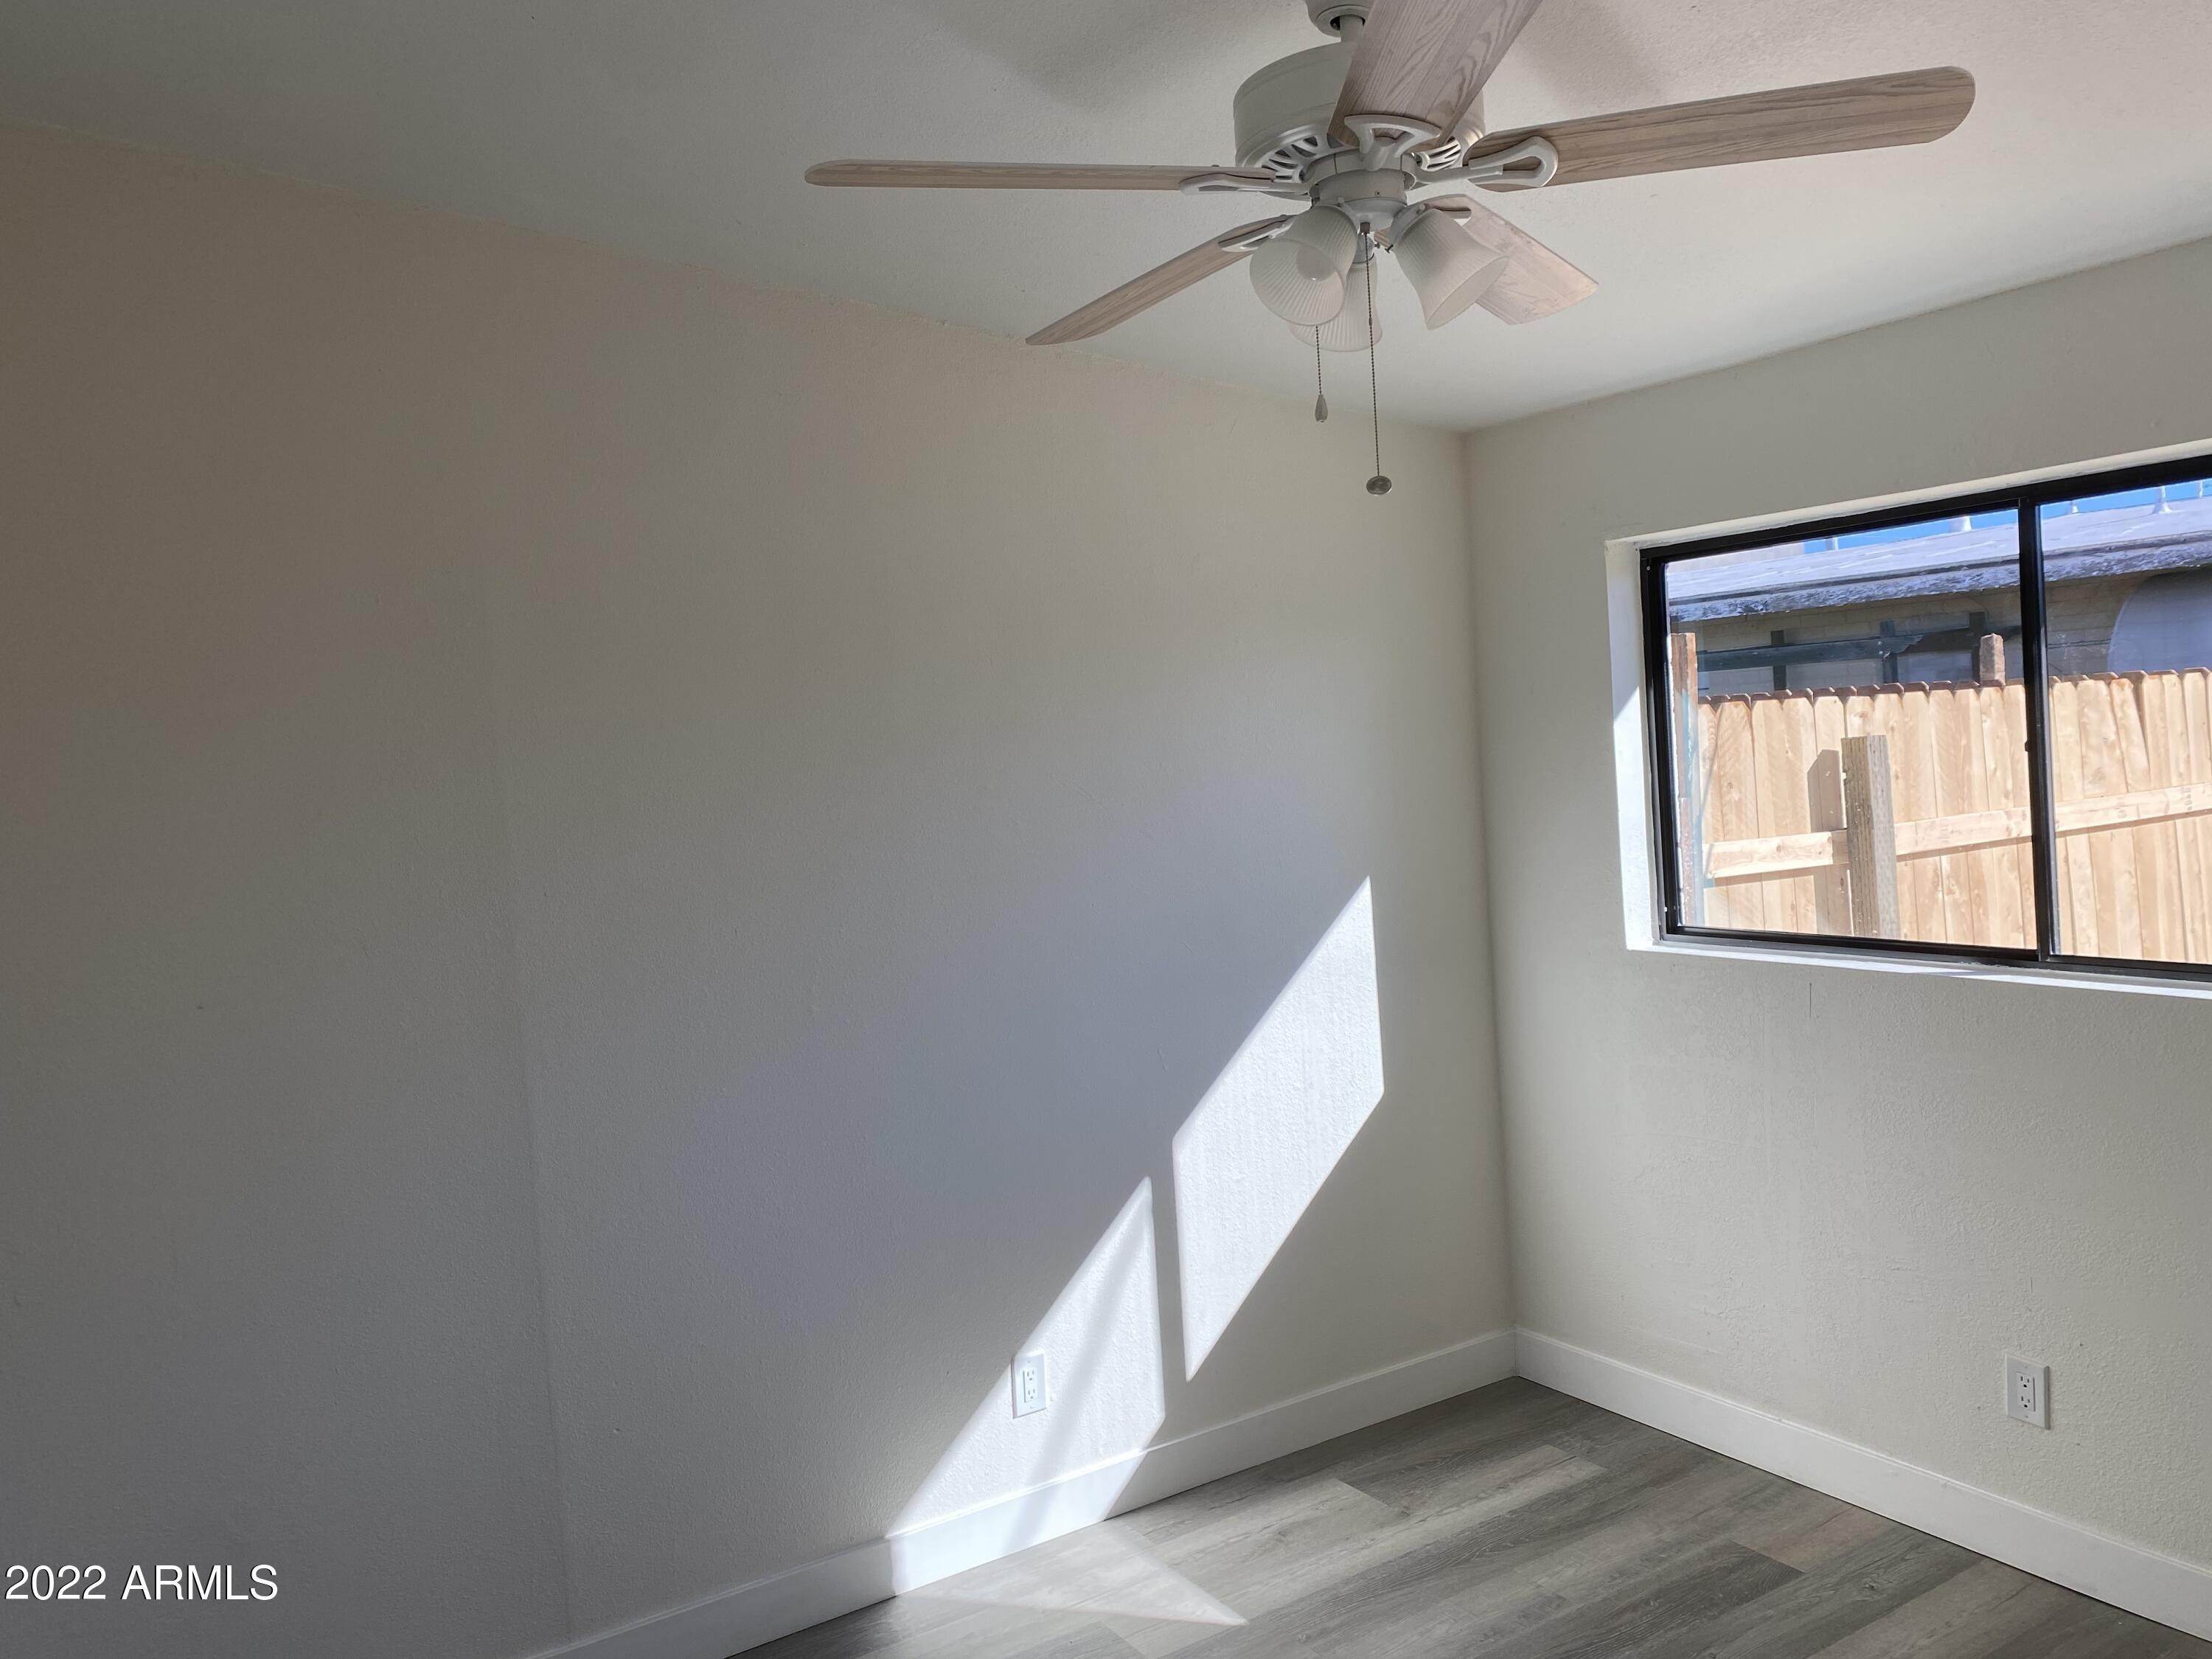 12. Duplex Homes for Sale at Mesa, AZ 85201